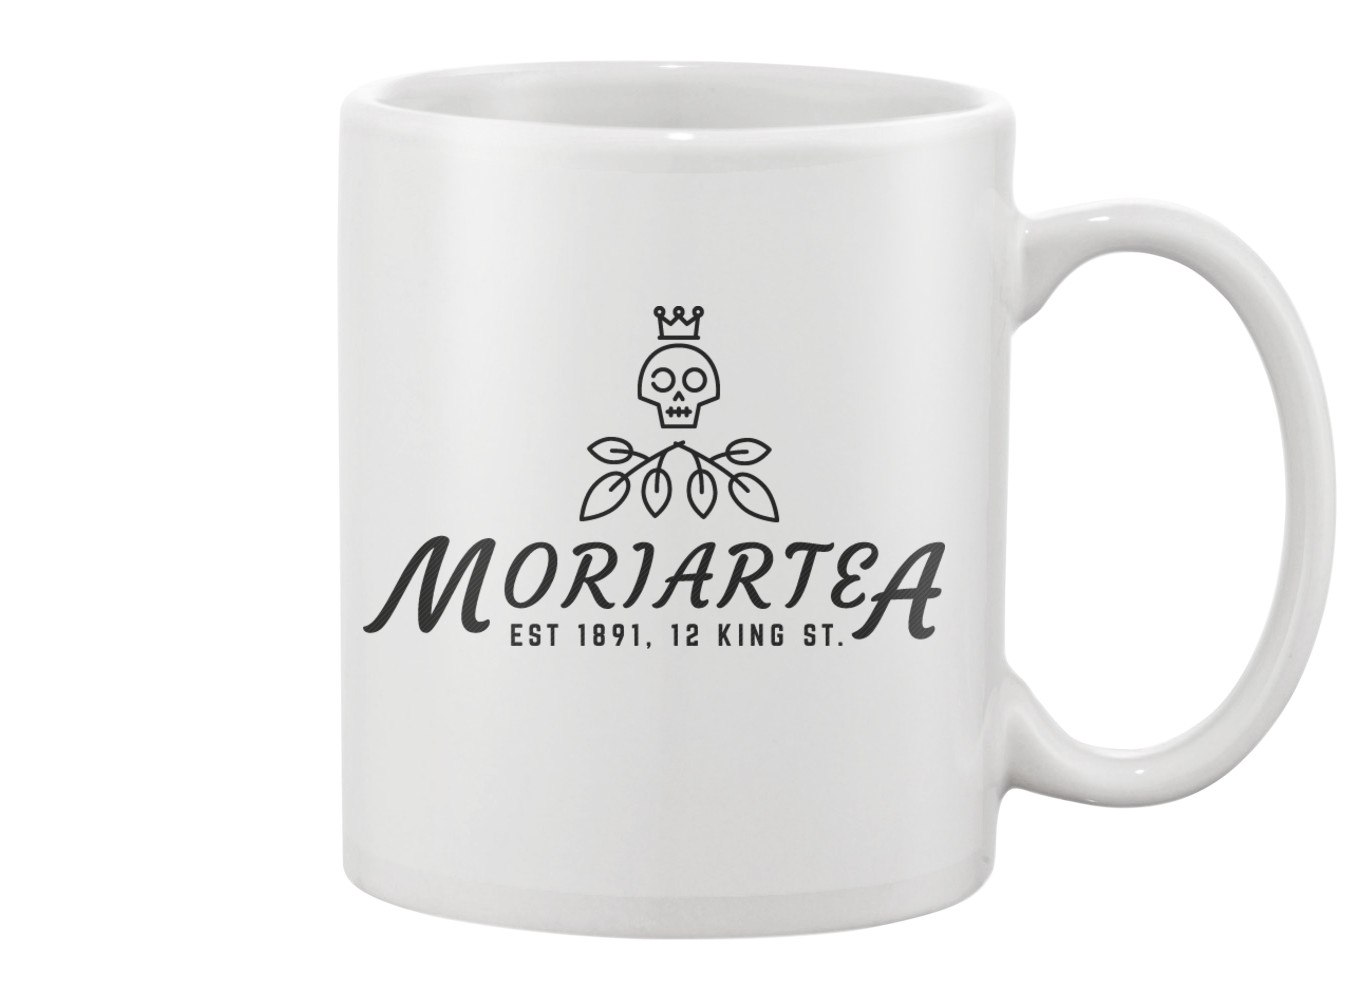 Sherlock - Moriar-Tea Mug, $15